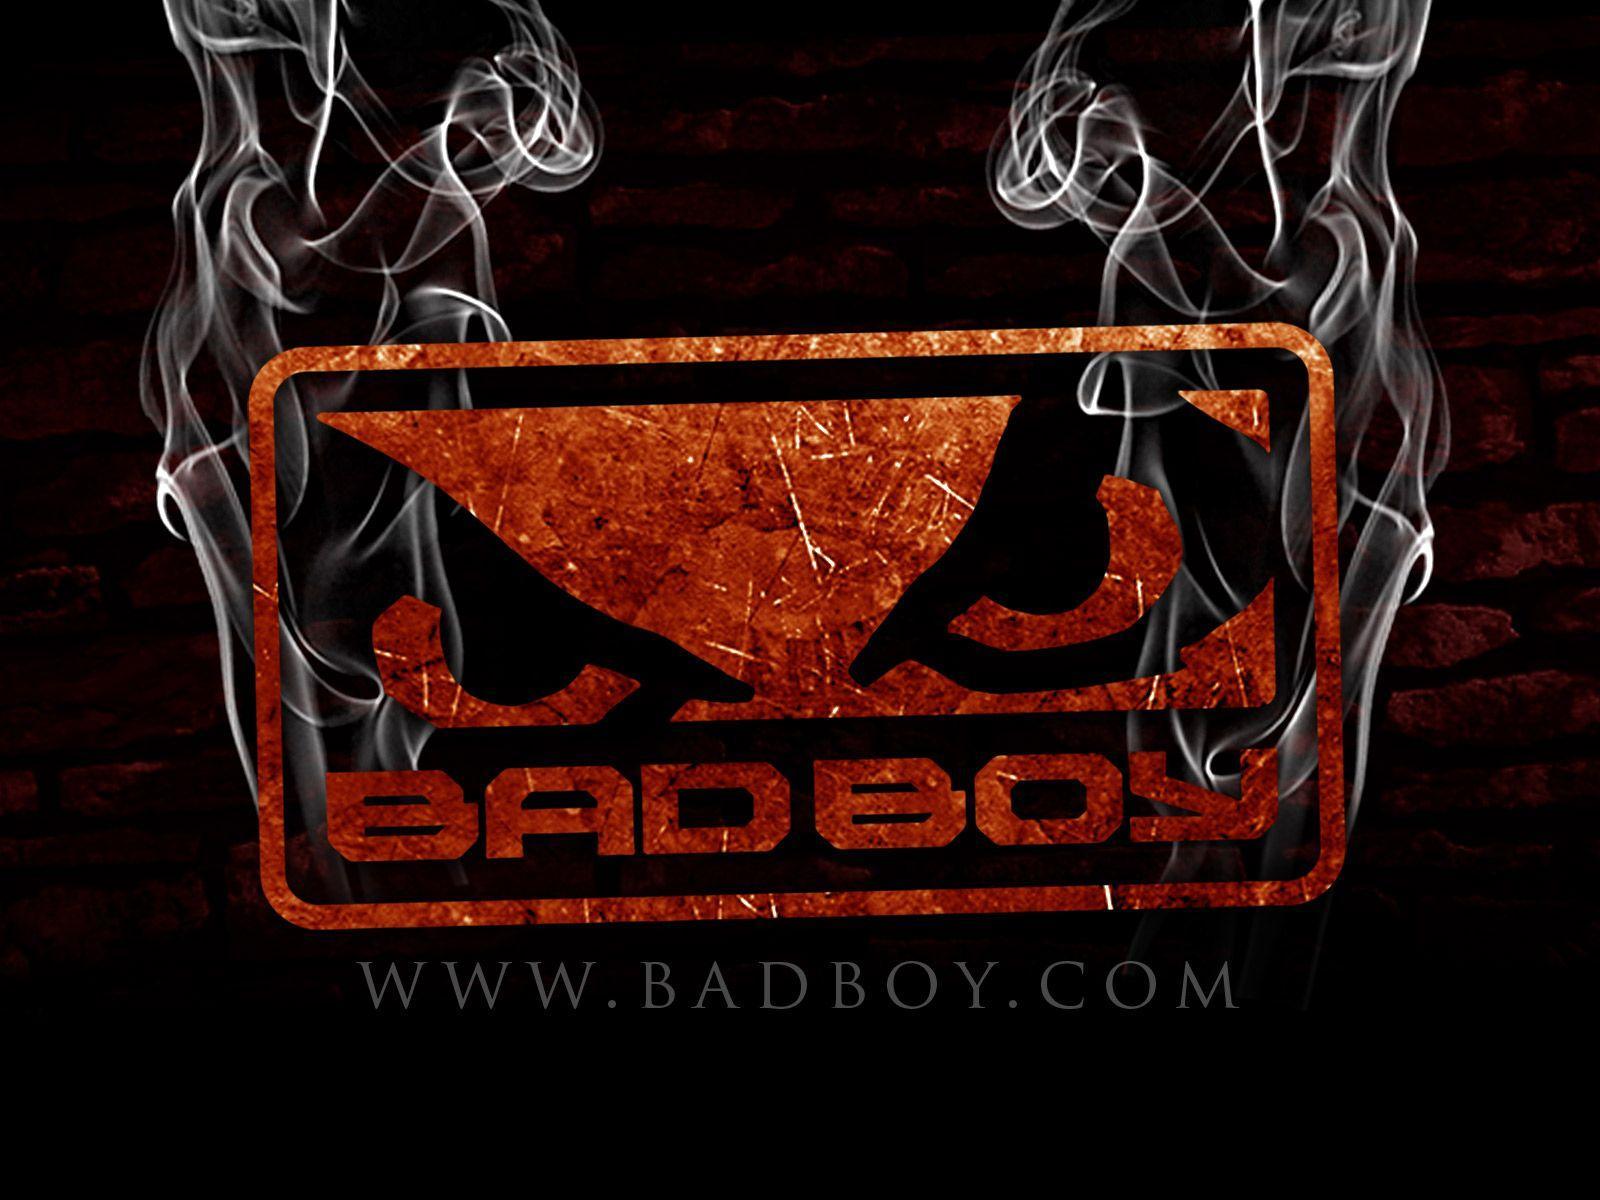 Bad boy png | Bad boys, Boys, Bad bay